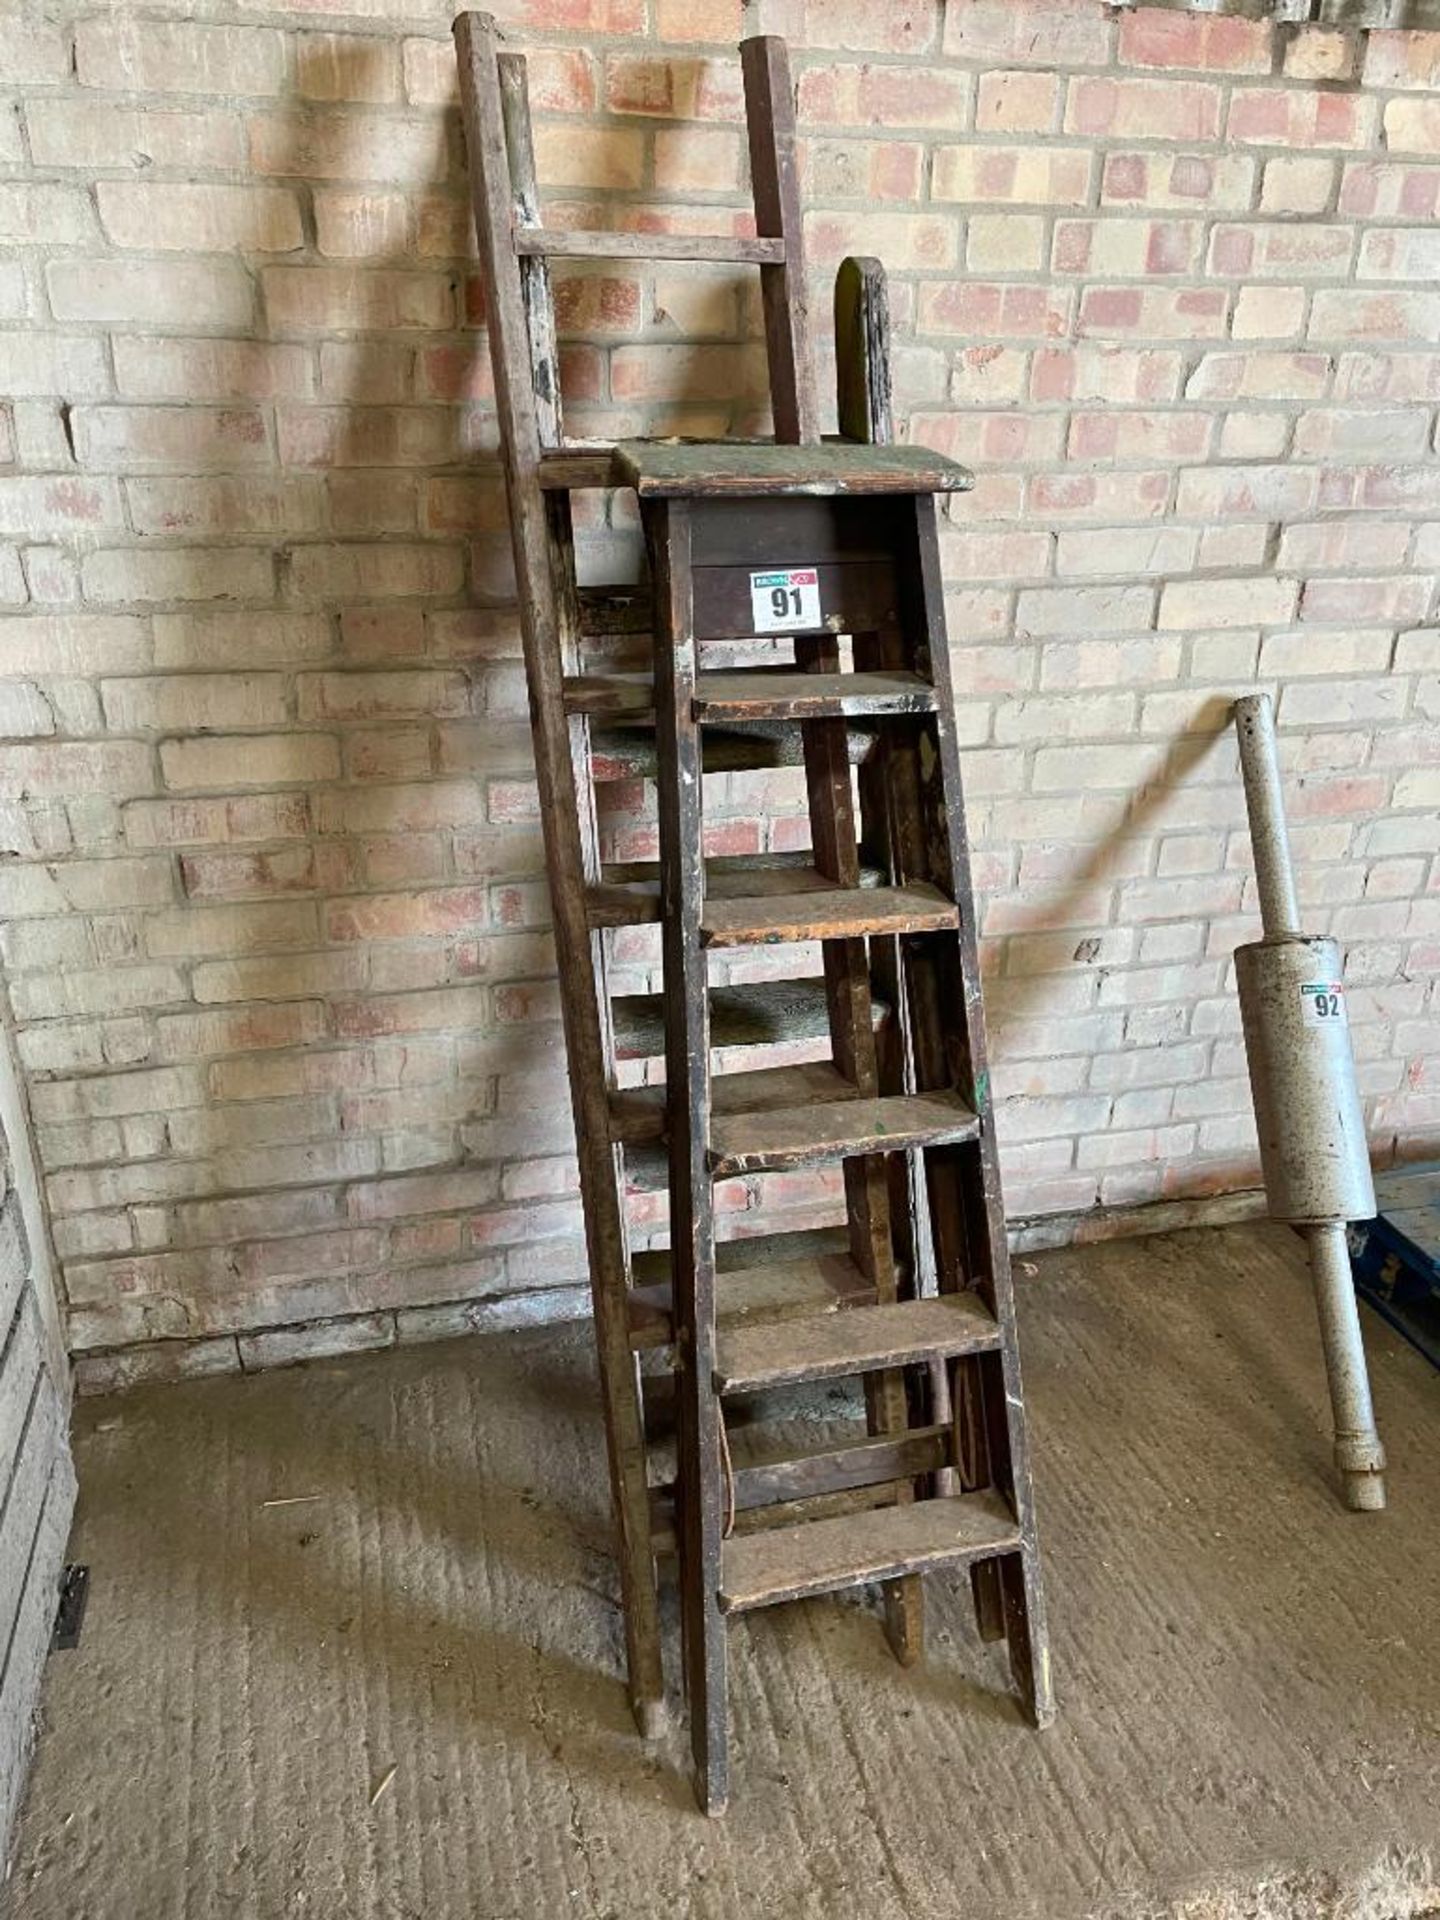 Wooden ladders